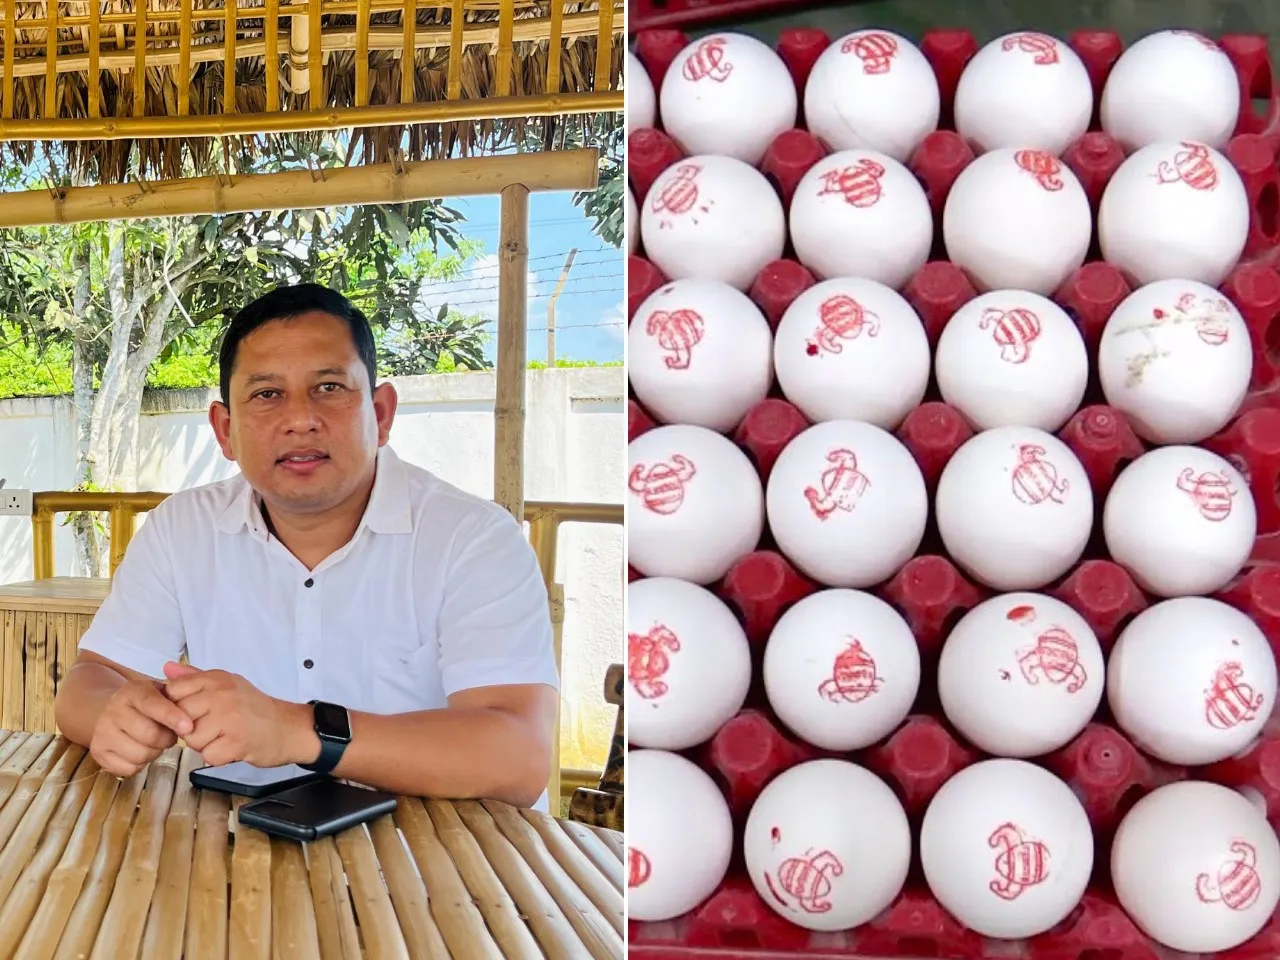 Akash Jyoti Gogoi began egg production under the Bahuboli brand in 2018